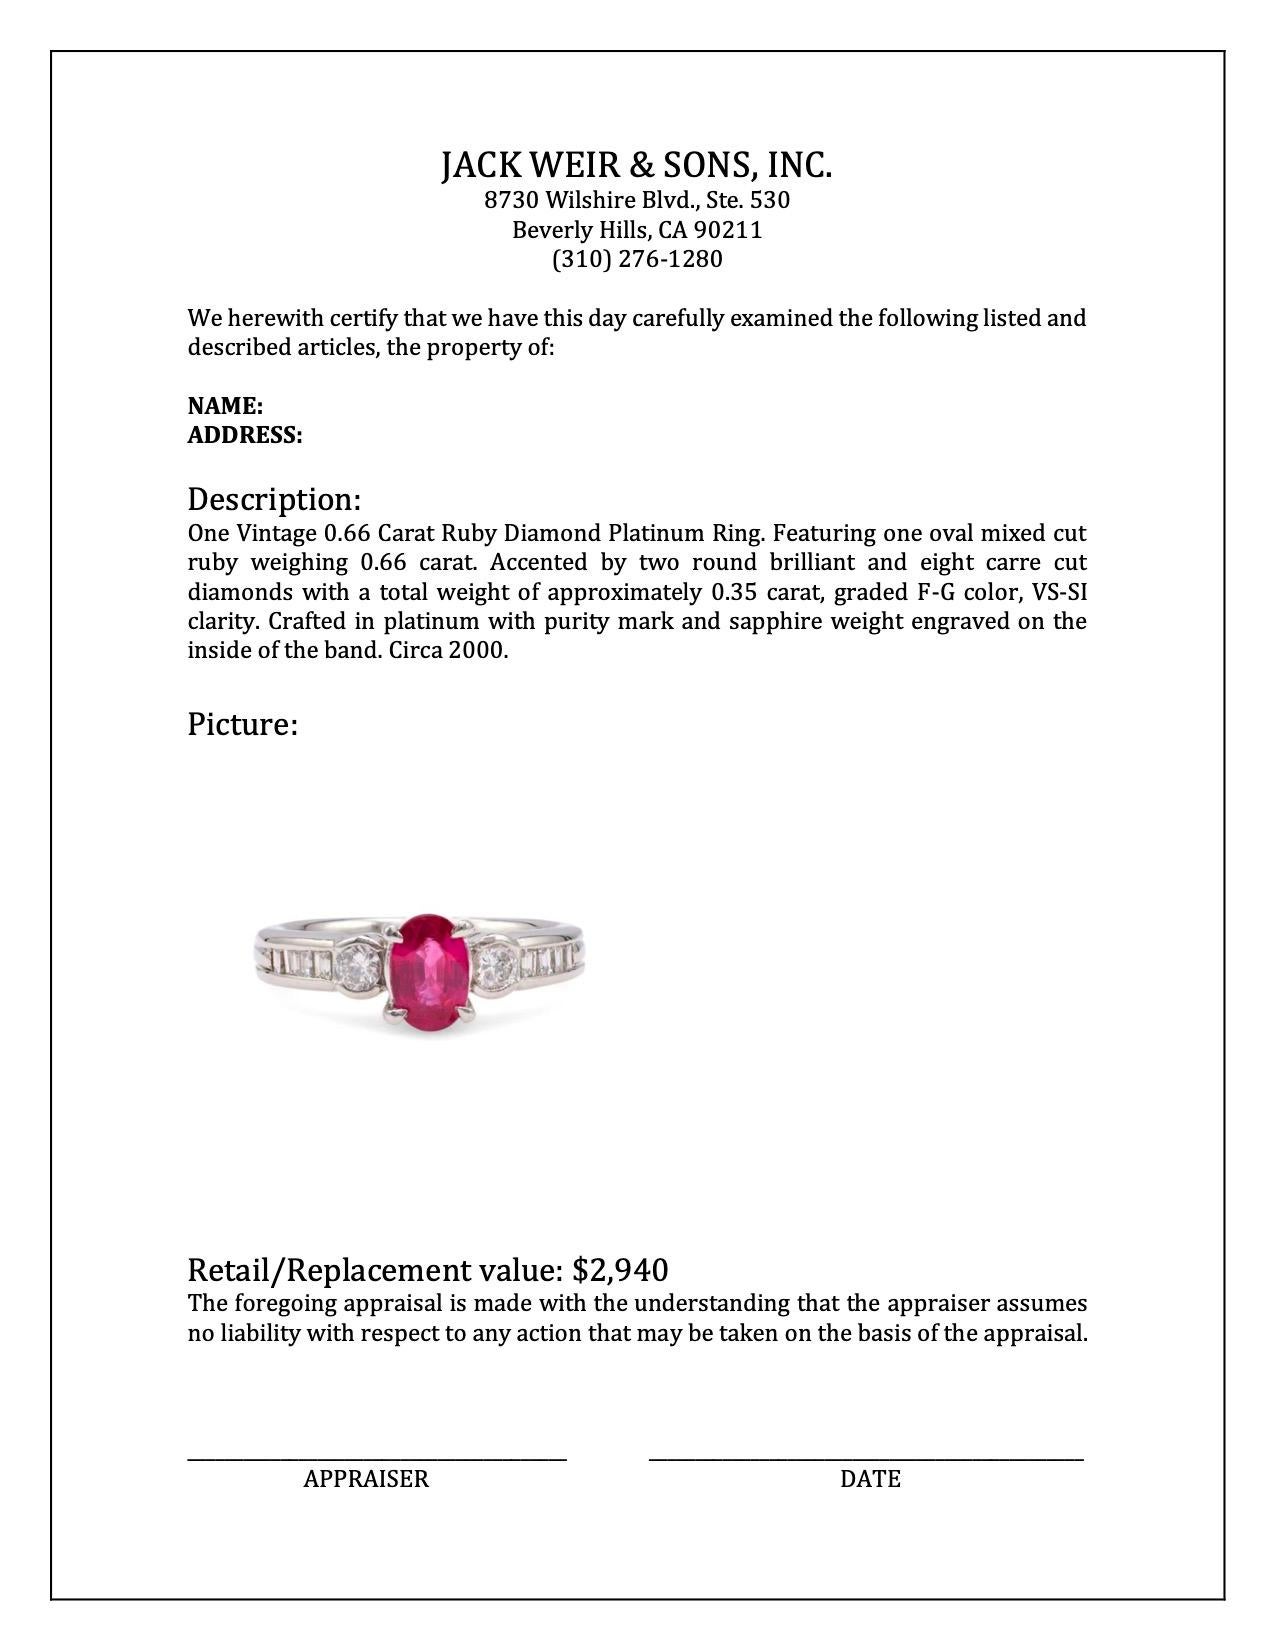 Women's or Men's Vintage 0.66 Carat Ruby Diamond Platinum Ring For Sale